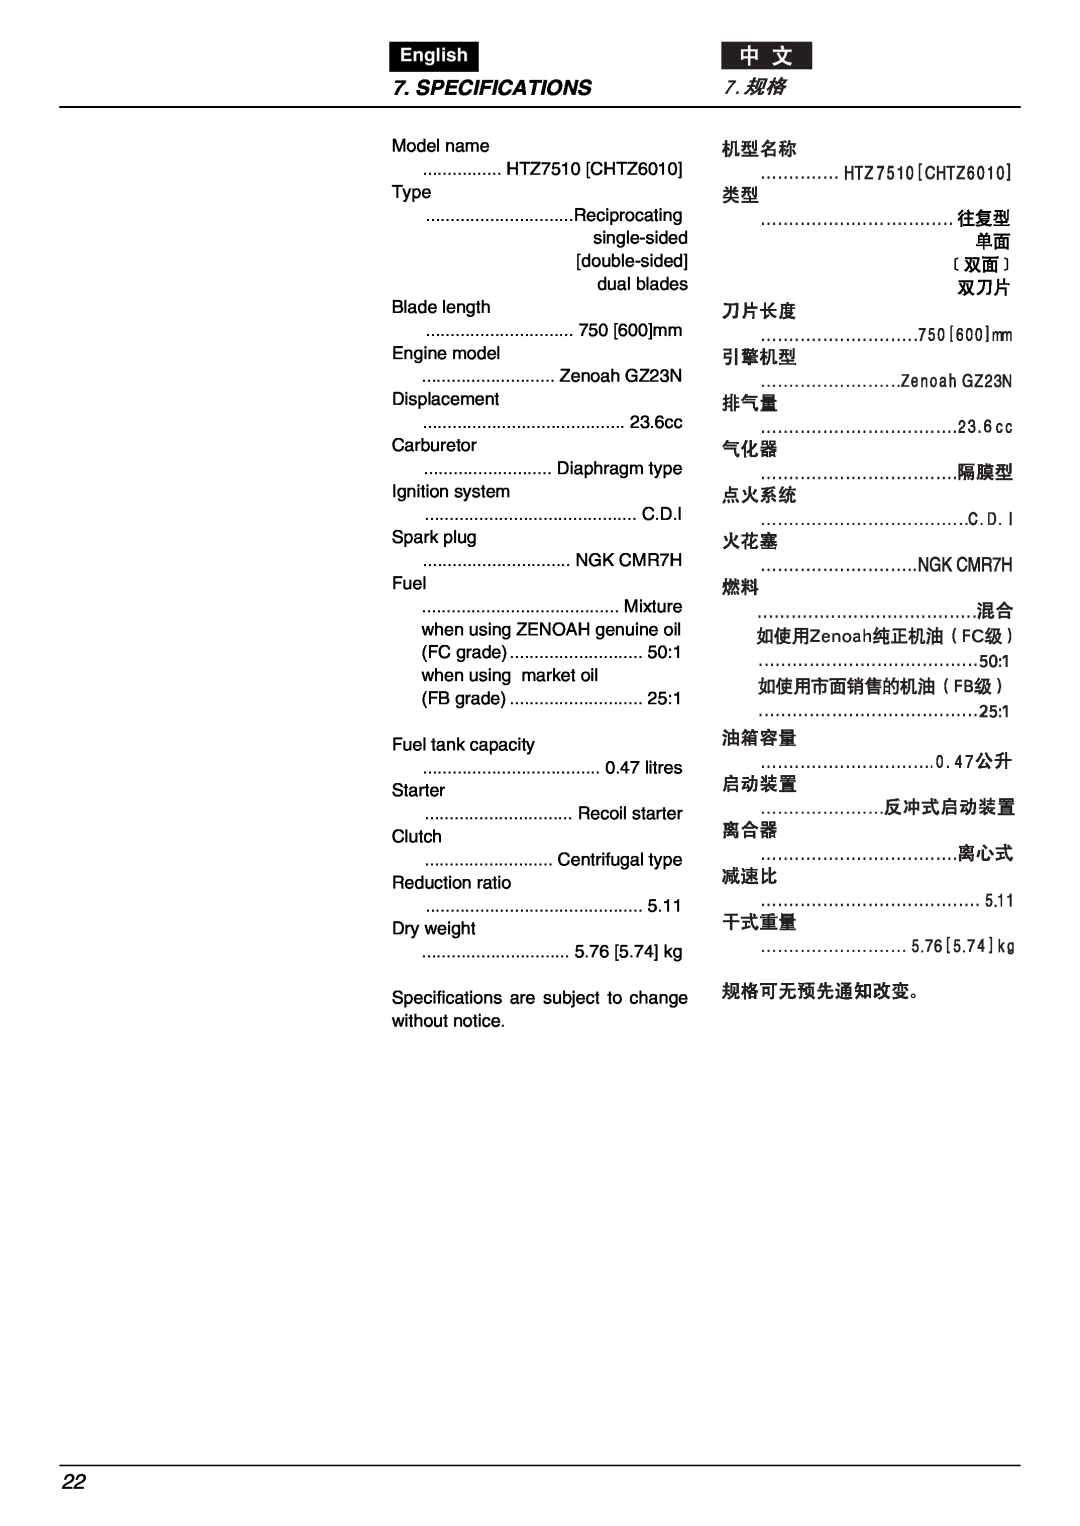 Zenoah HTZ7510, CHTZ6010 owner manual Specifications, English 